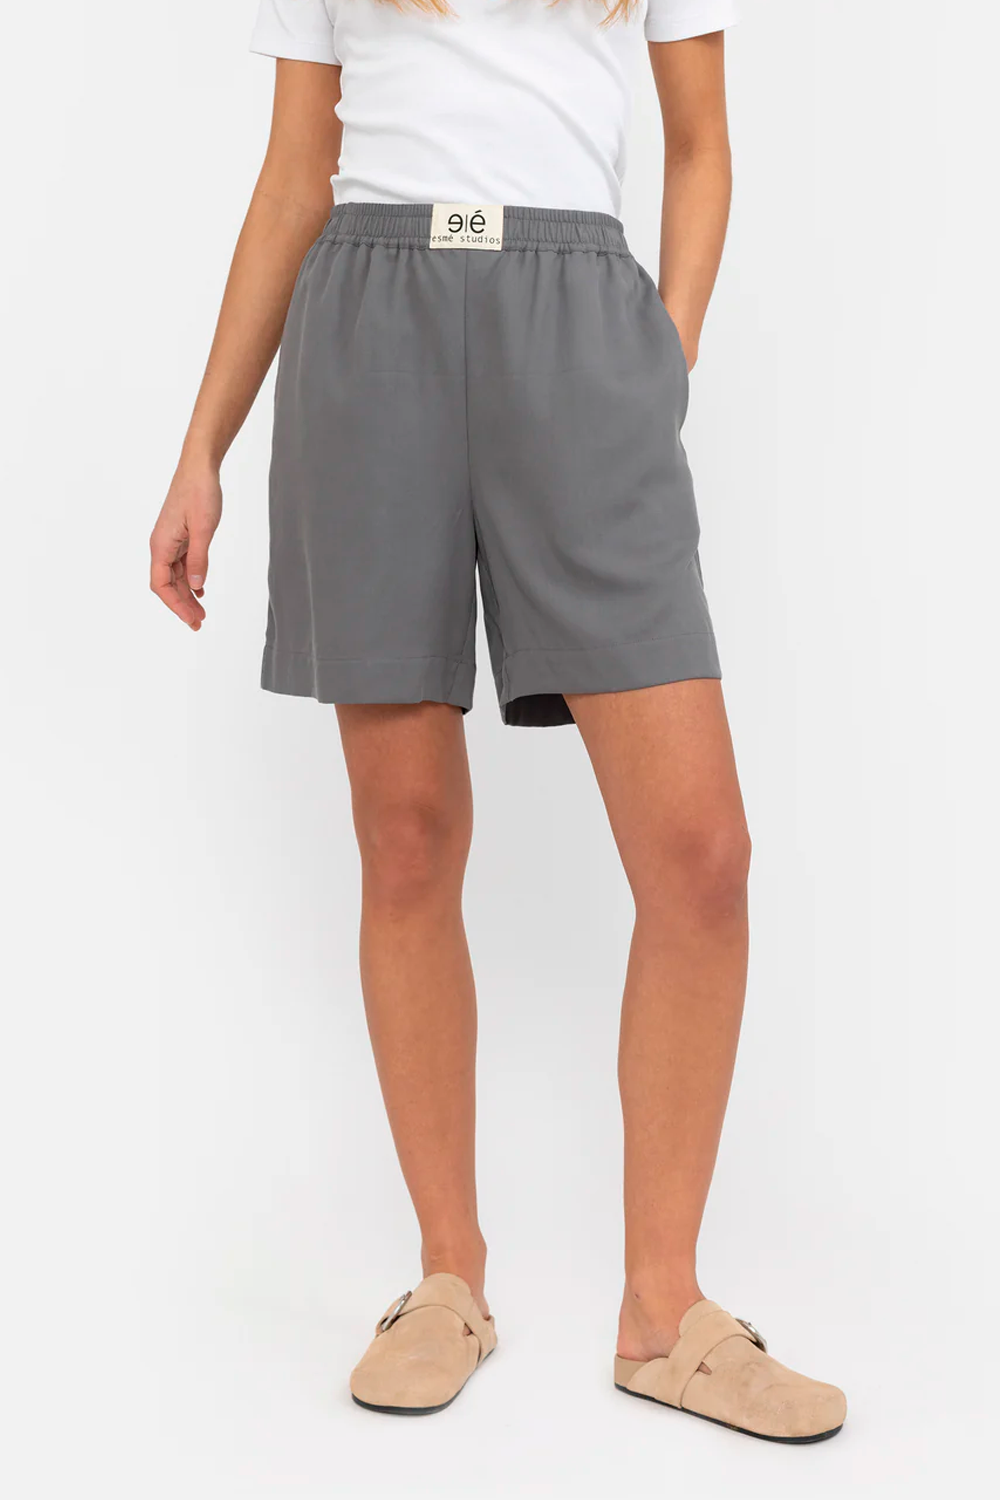 Lica Shorts, Charcoal Gray